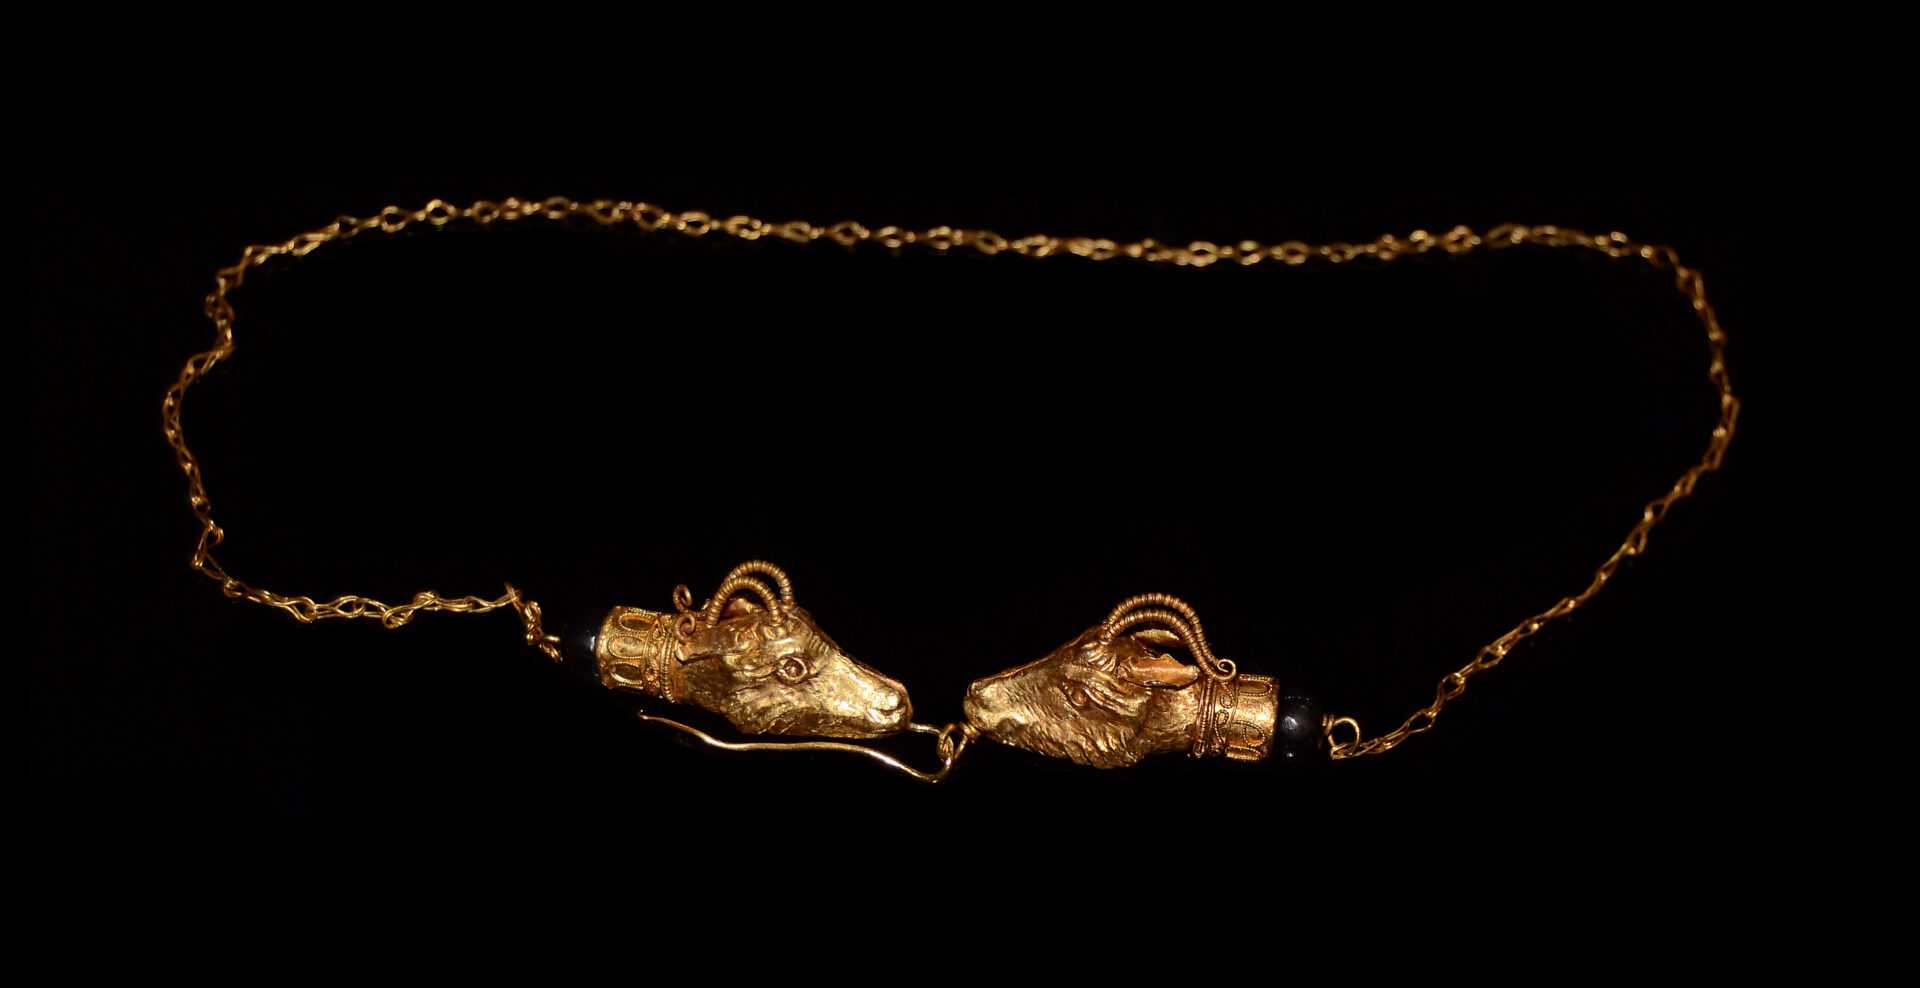 Hellenistic golden chain